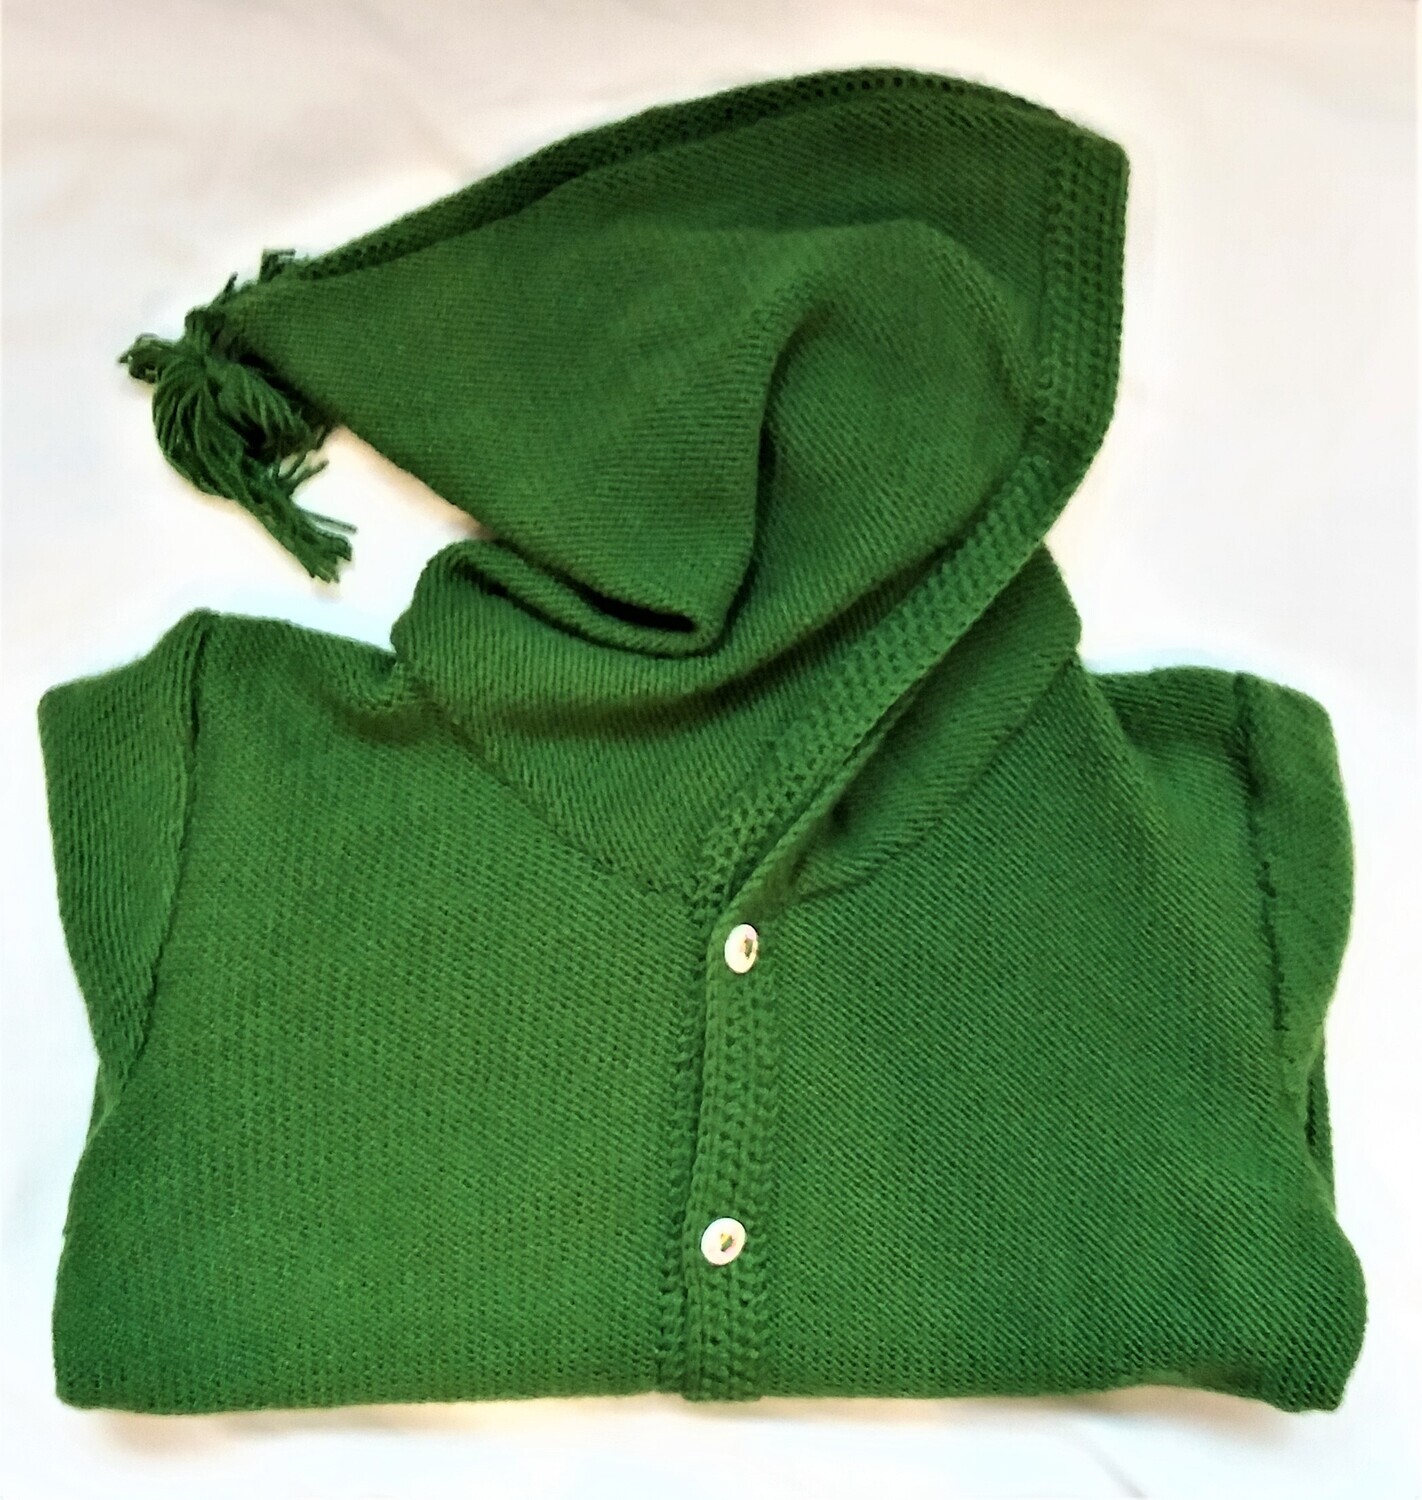 Green Jacket with hood